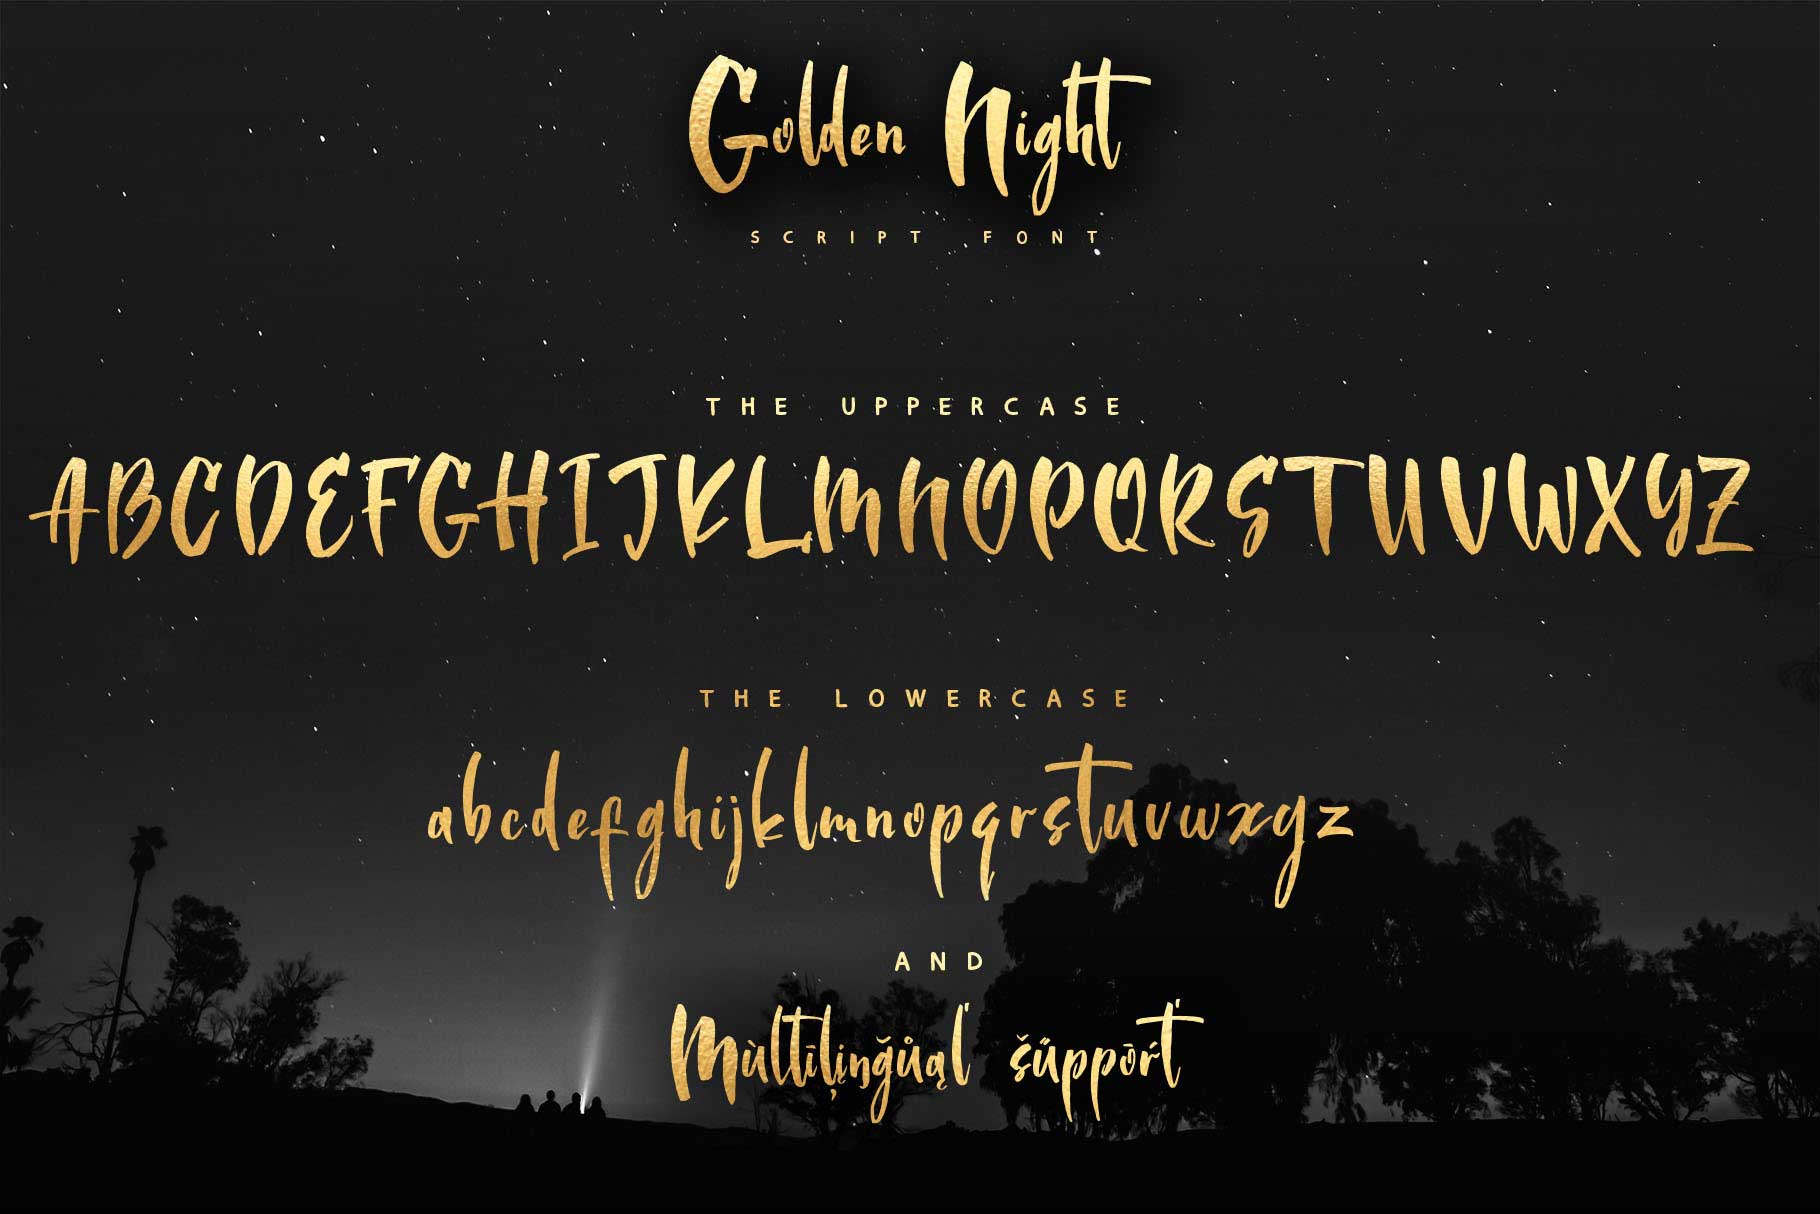 Golden Night Cyrillic & PS styles font.